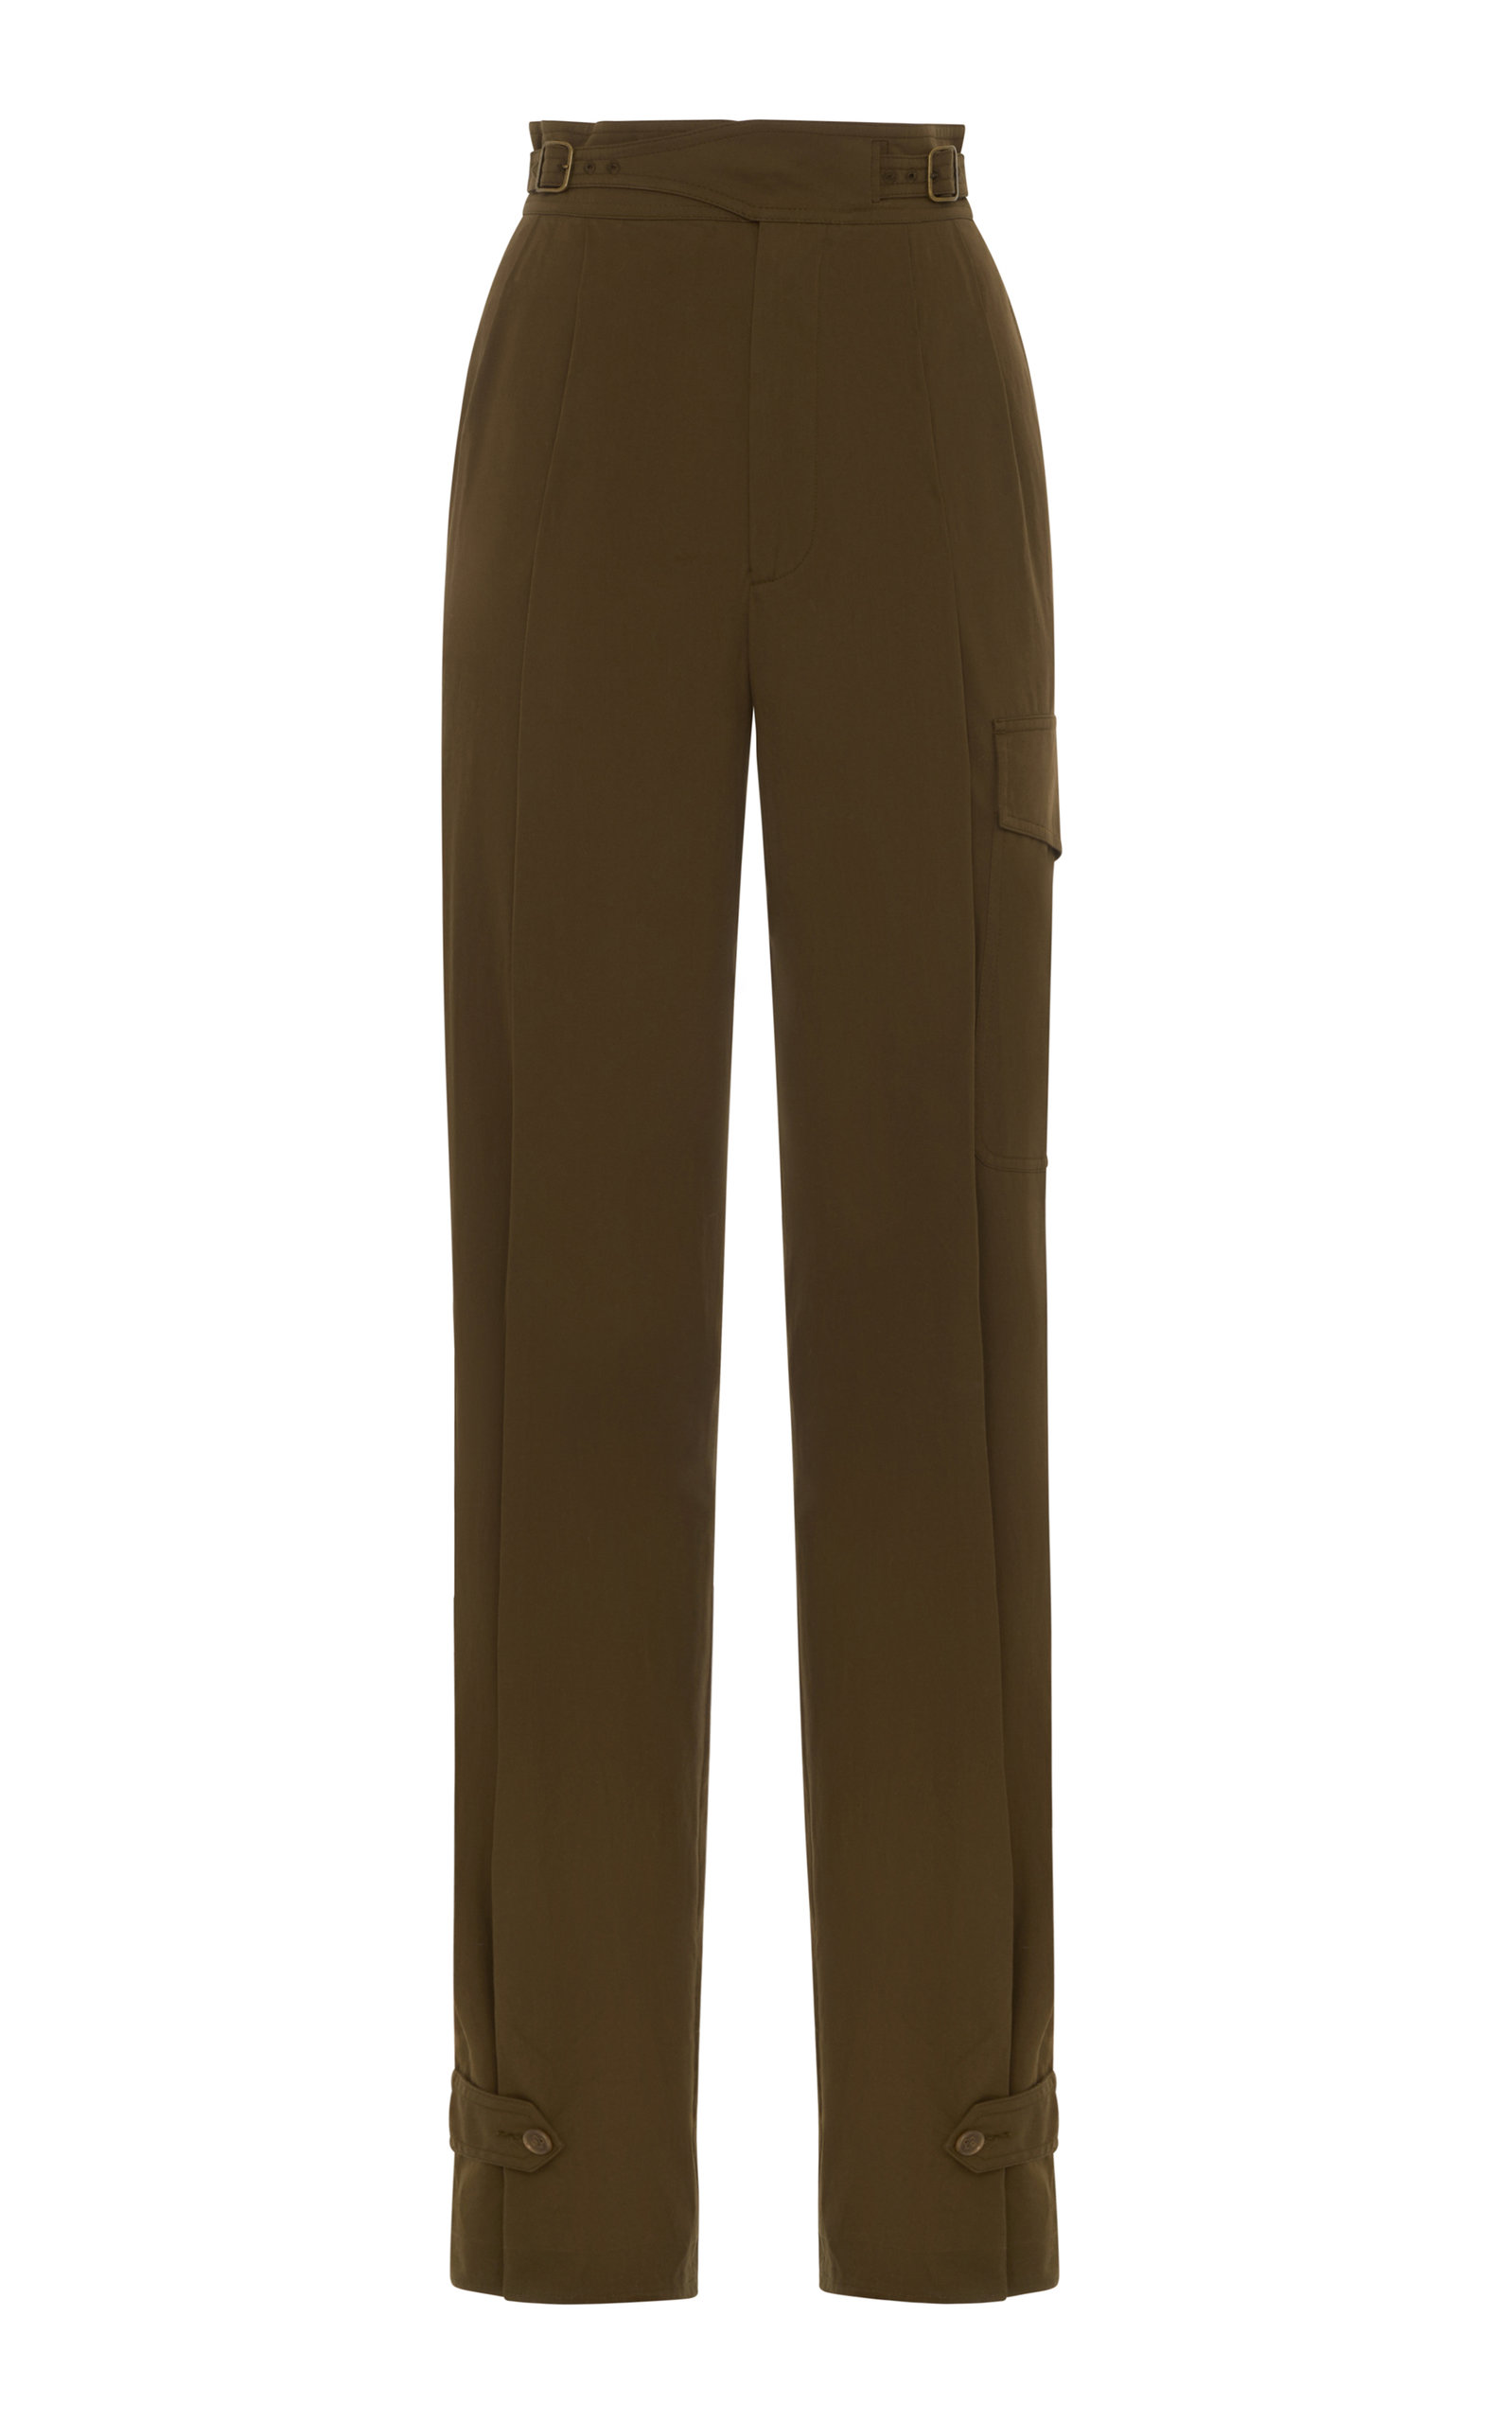 Ralph Lauren - Women's Anniston Pant - Green - US 2 - Moda Operandi